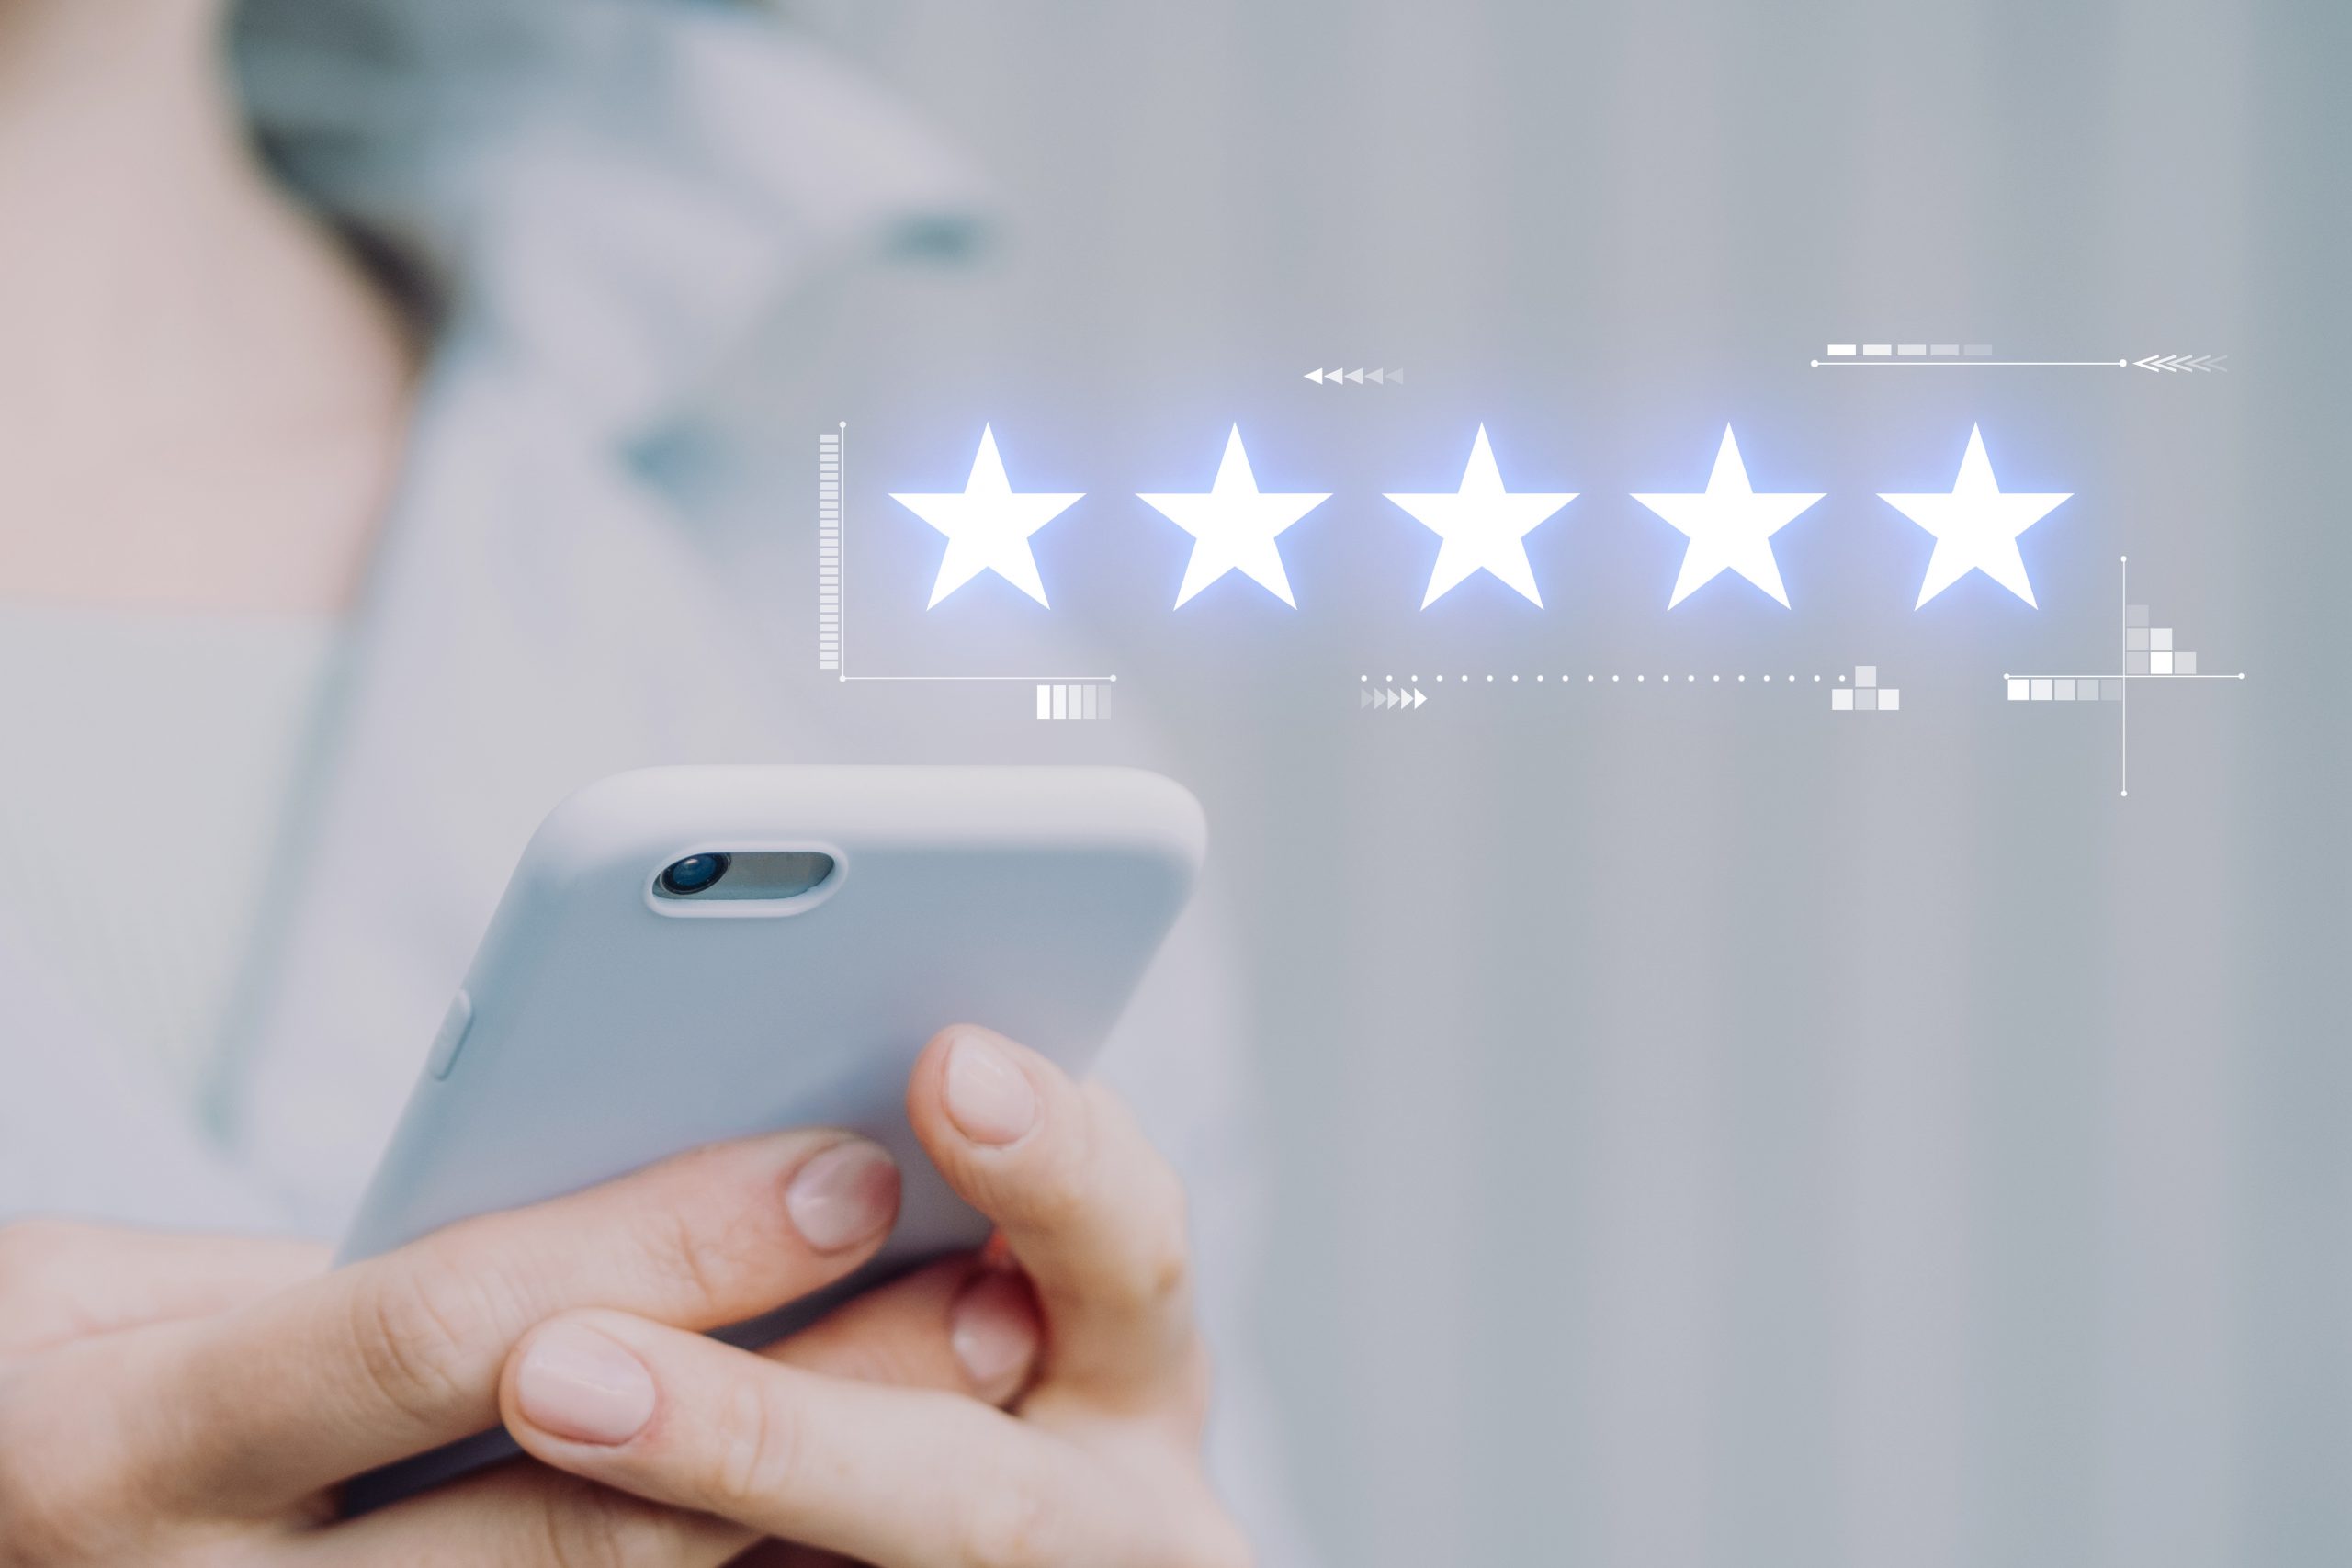 Online reviews, online ratings